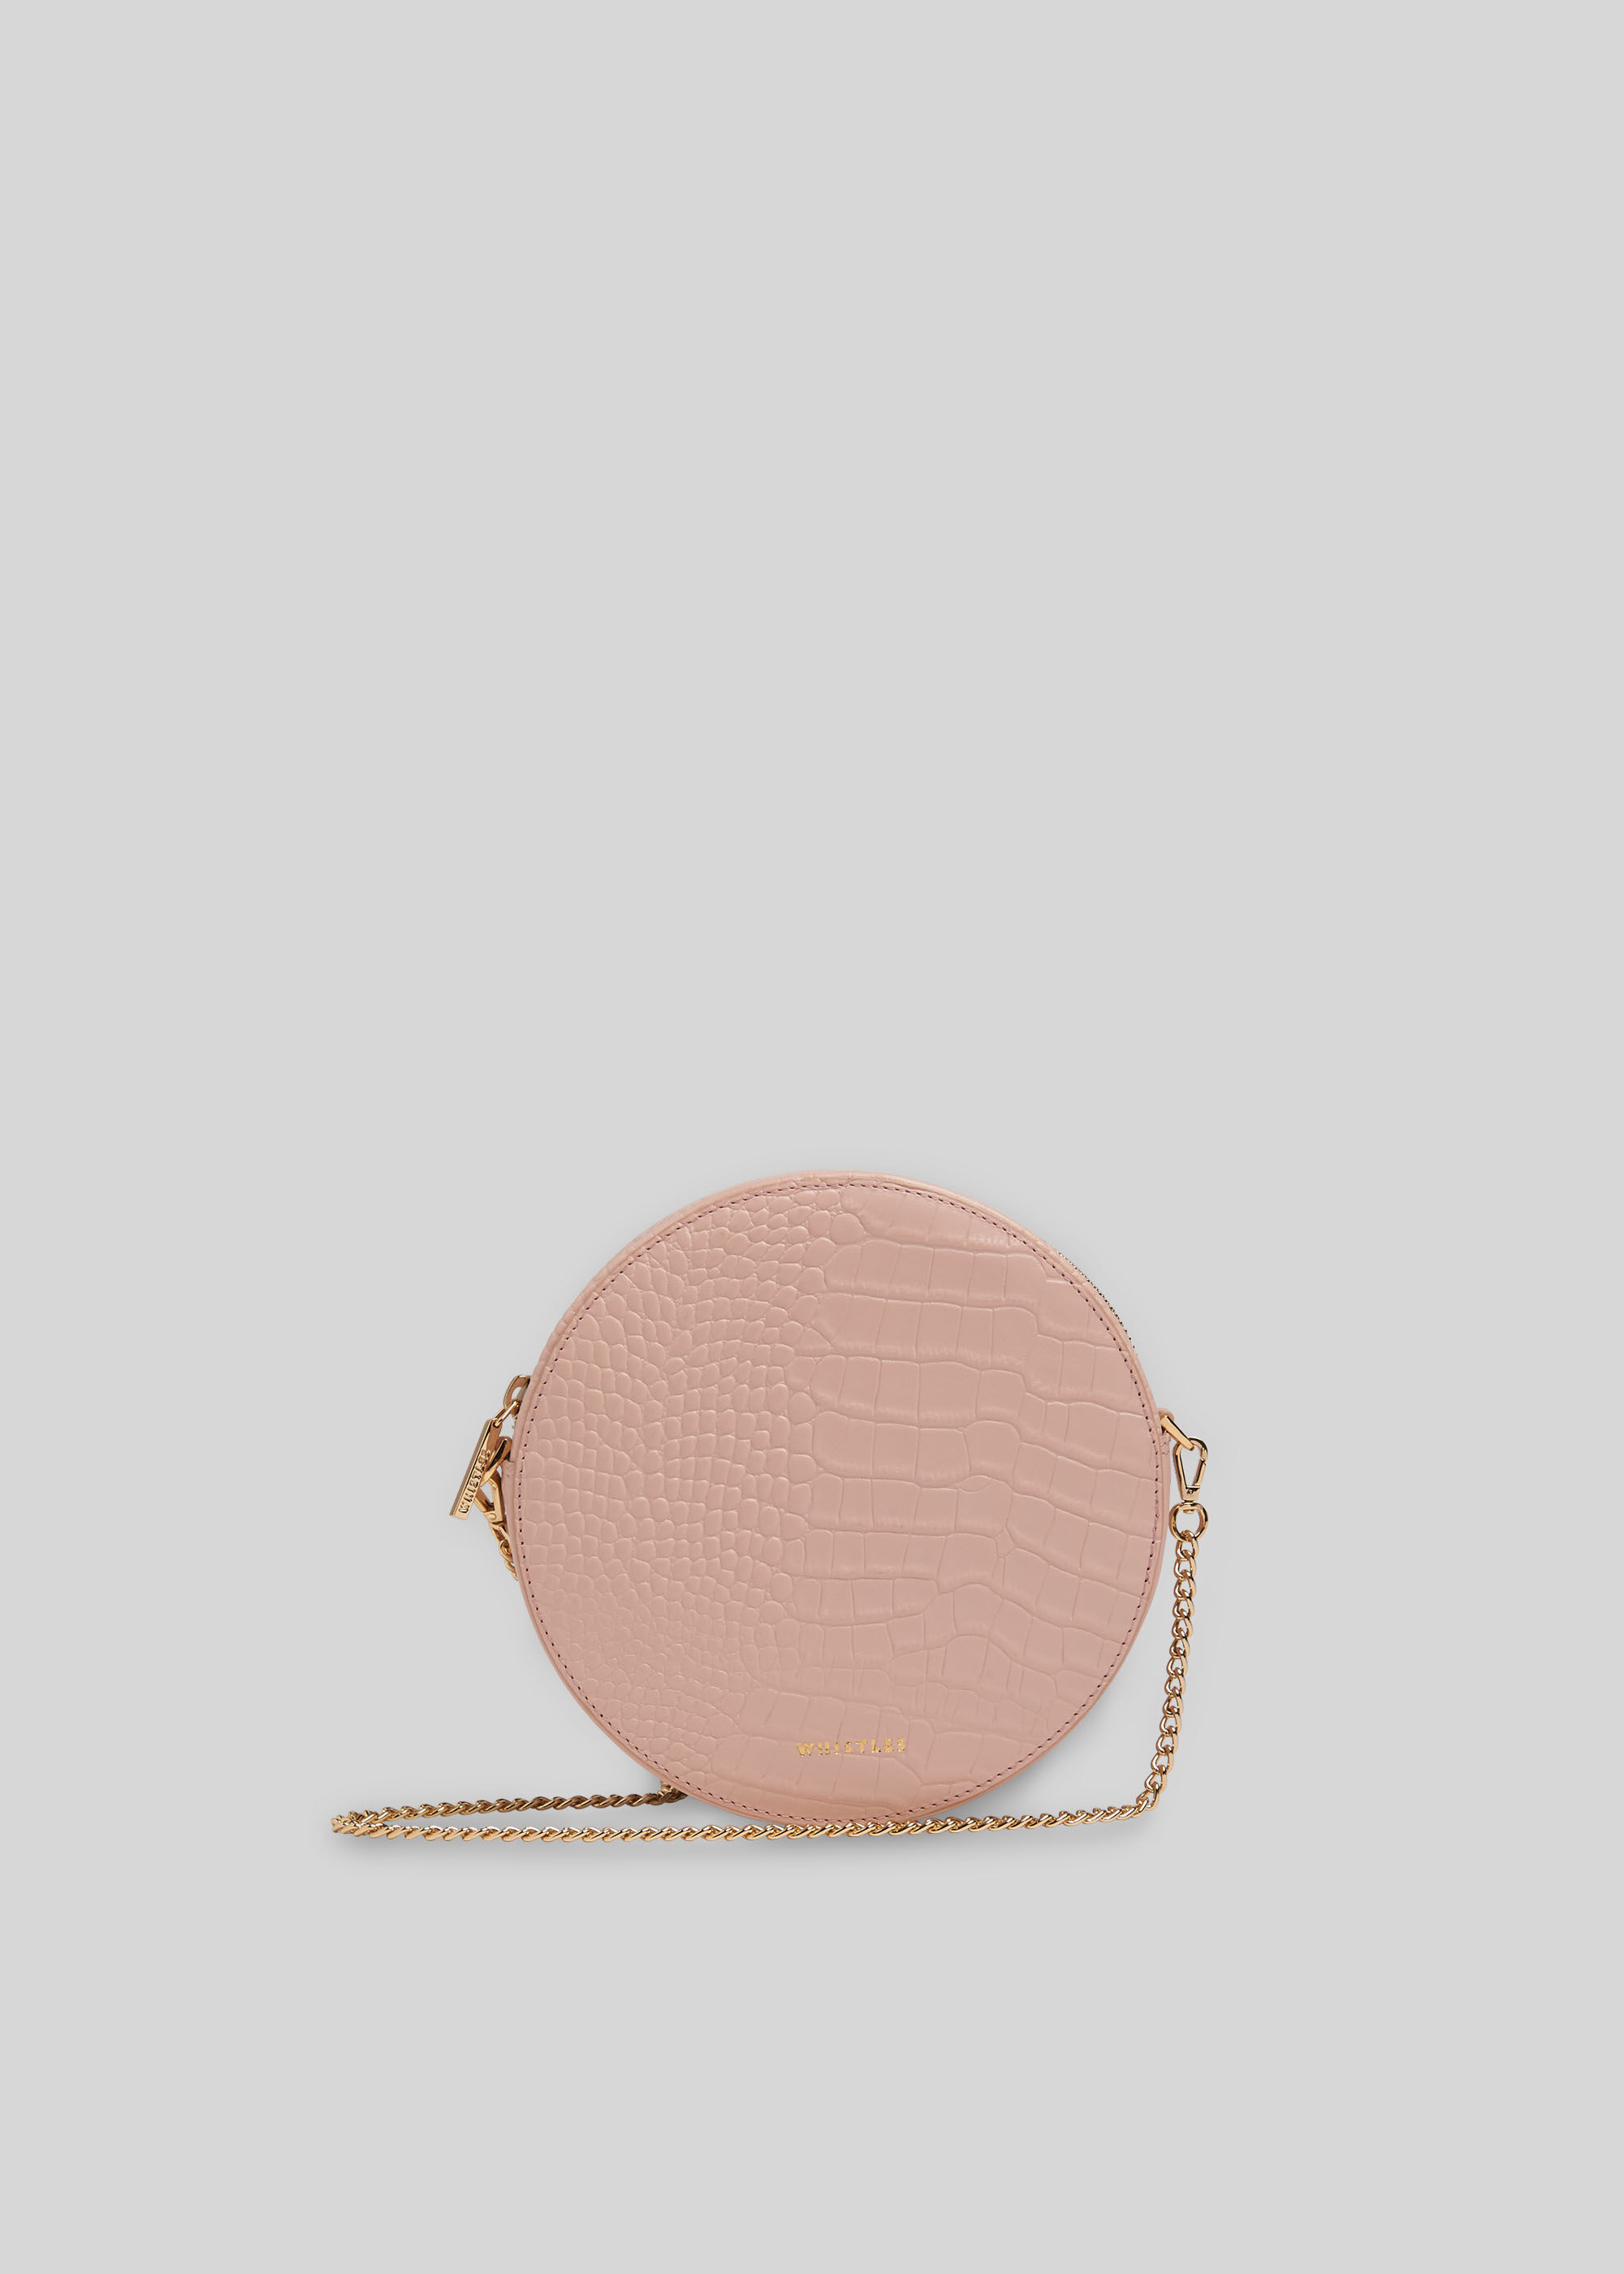 pink handbags